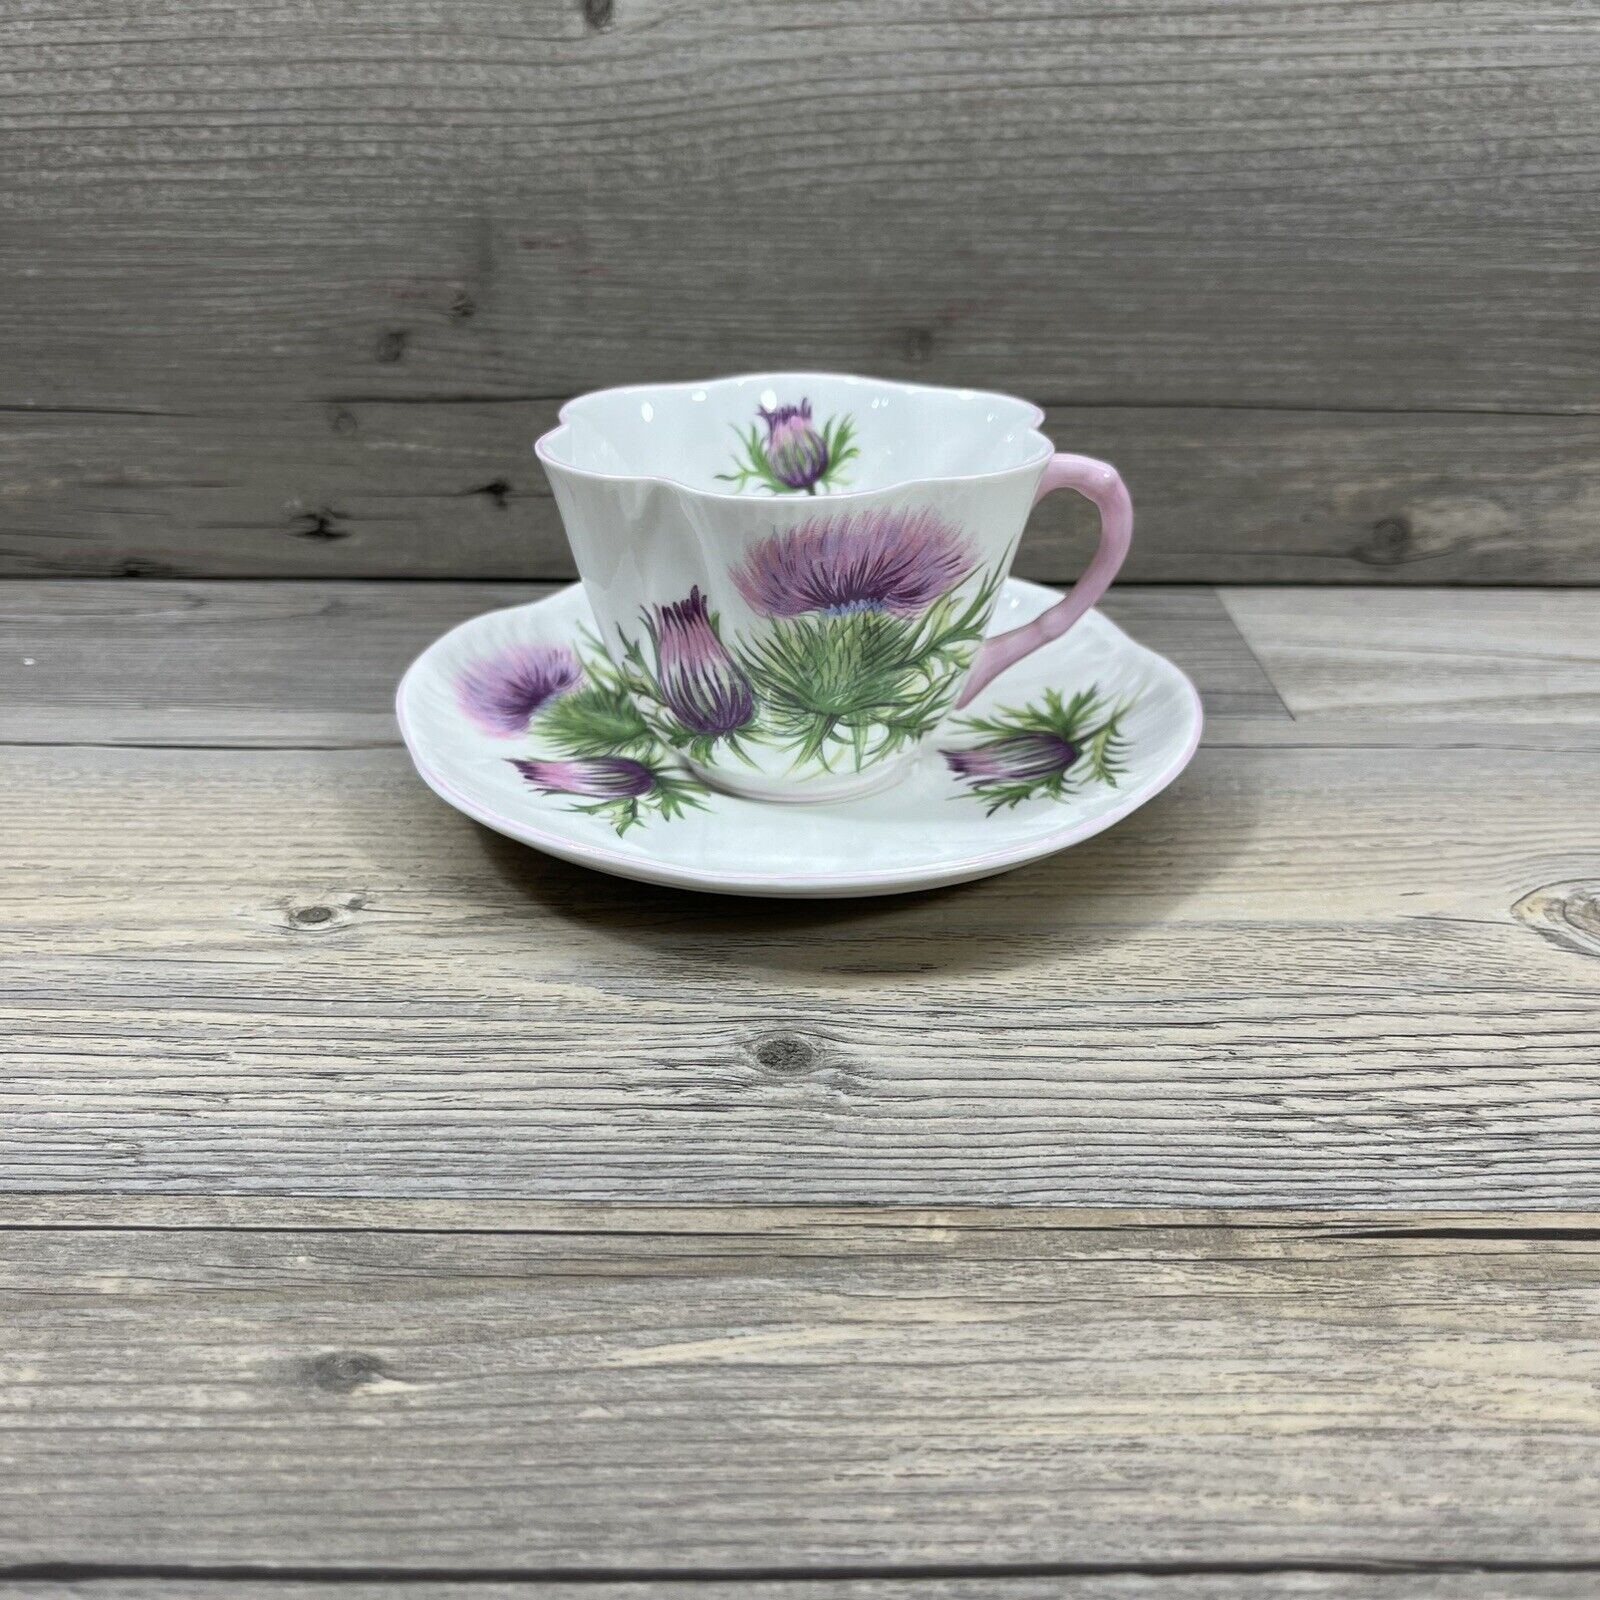 VTG Shelley England Thistle 13820 Dainty Teacup & Saucer Fine Bone China Floral